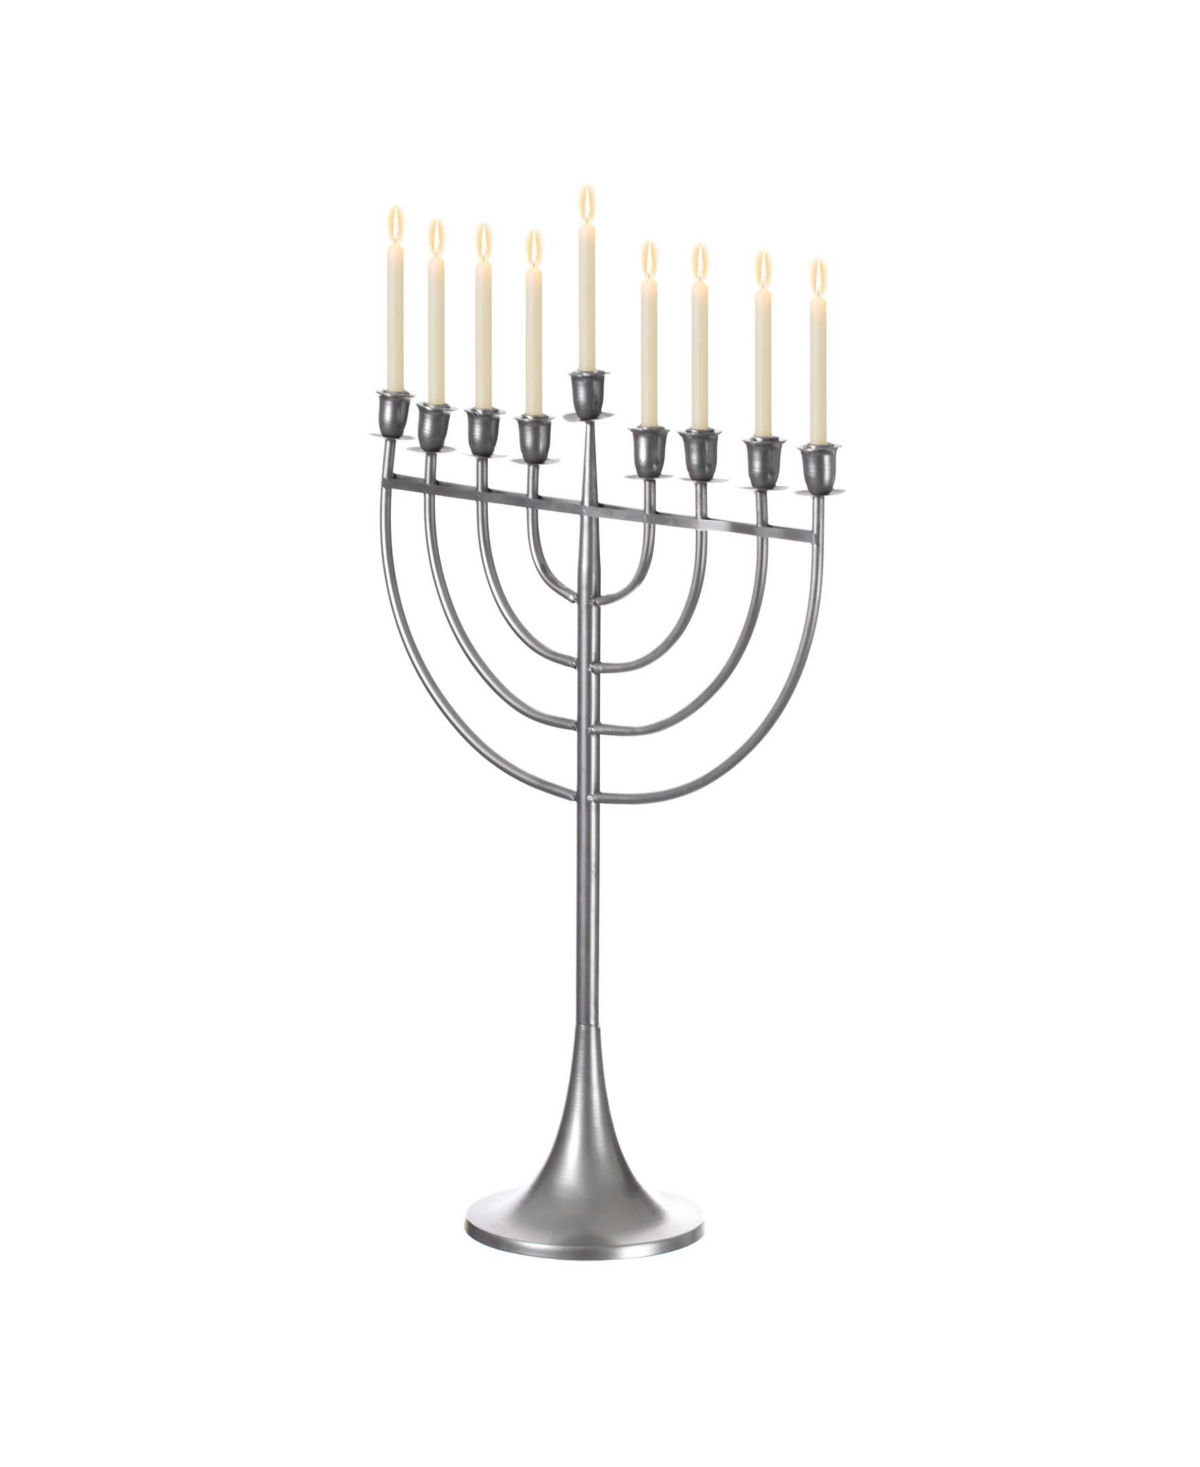 Modern Judaic Hanukkah Menorah 9 Branched Candelabra, Aluminum Finish, Medium - Silver-Tone